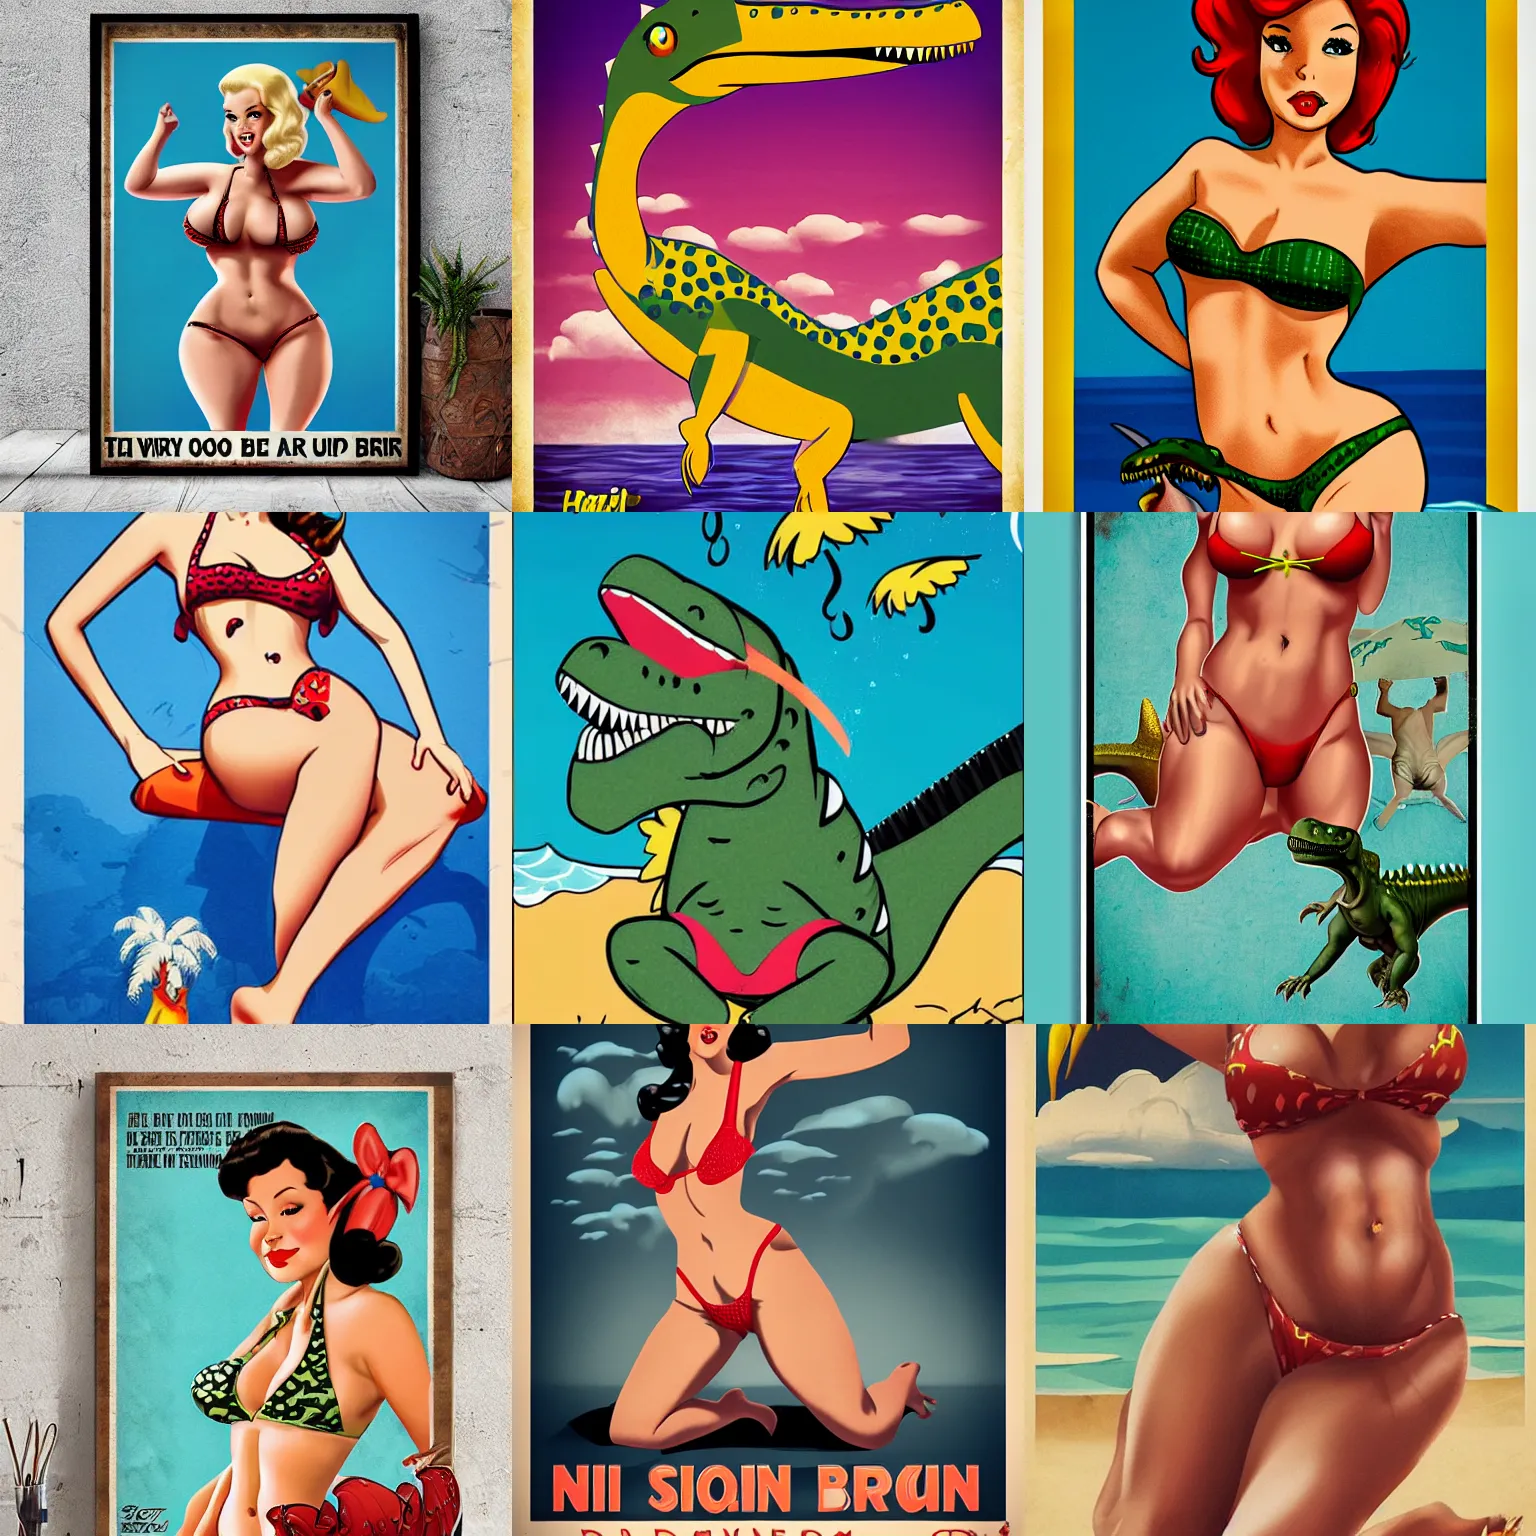 Prompt: Dinosaur wearing a bikini, pin up style poster